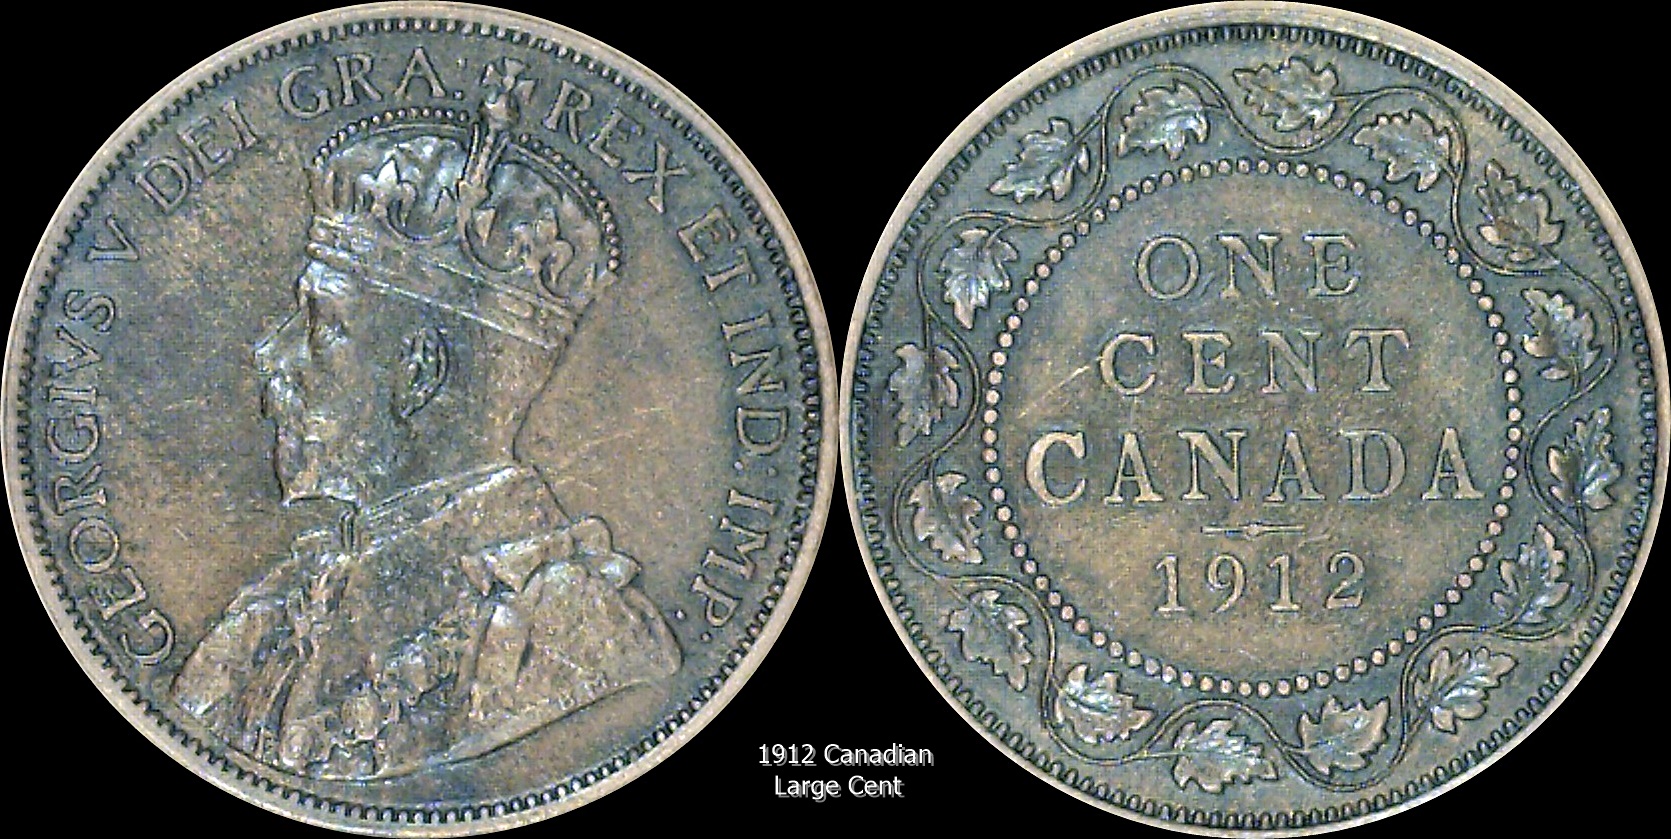 1912 Canadian Lg Cent.jpg